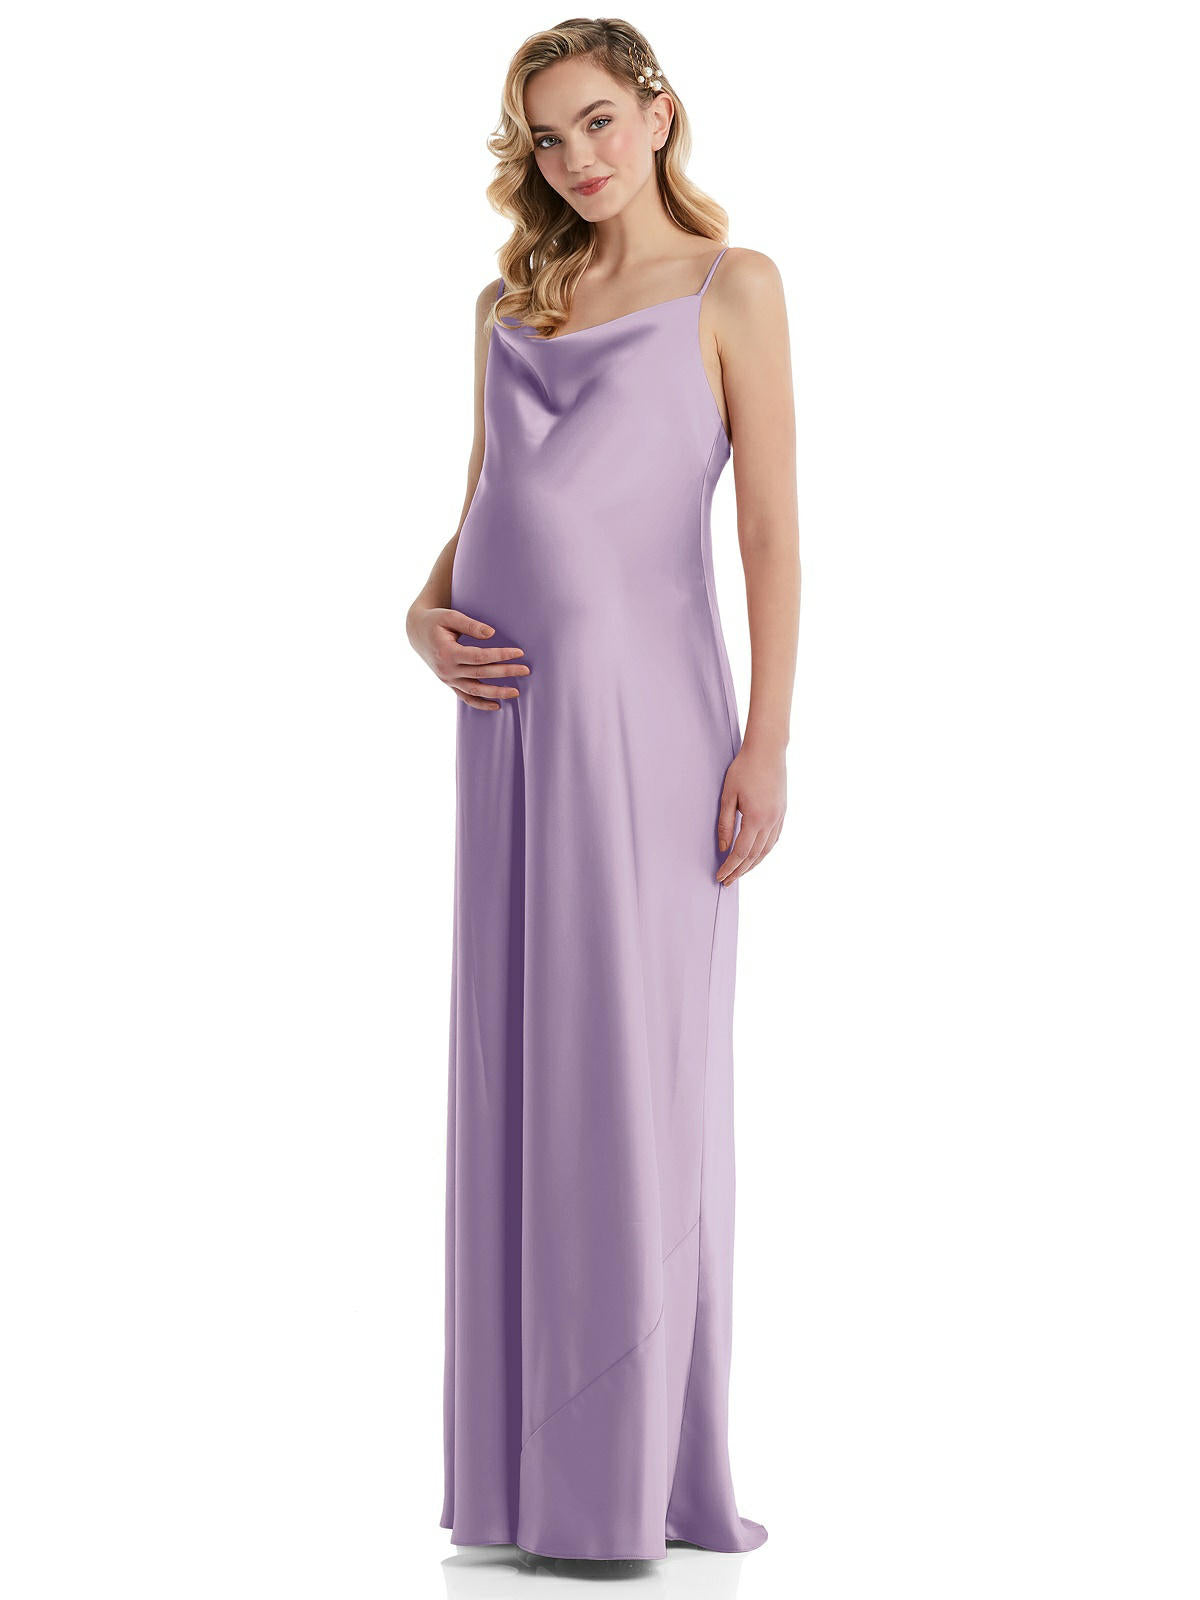 Cowl Neck Maternity Photoshoot Dress